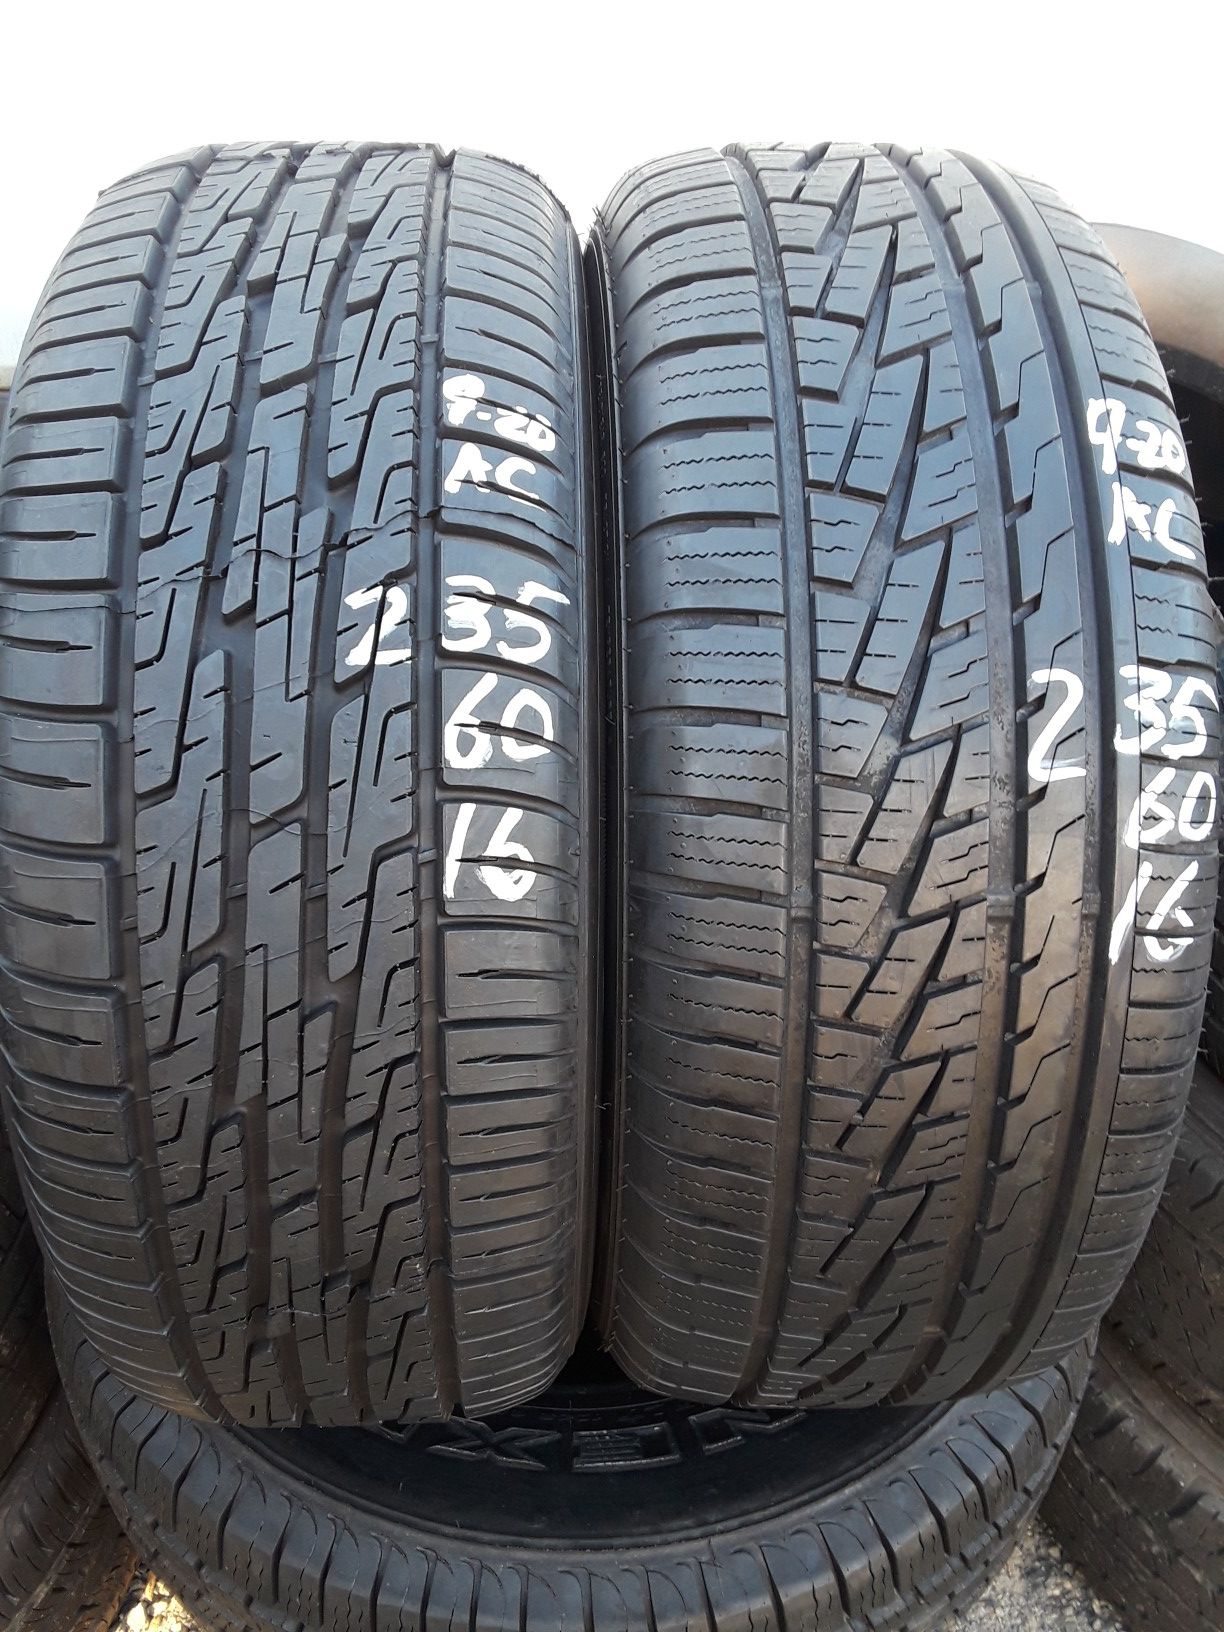 235/60-16 #2 tires